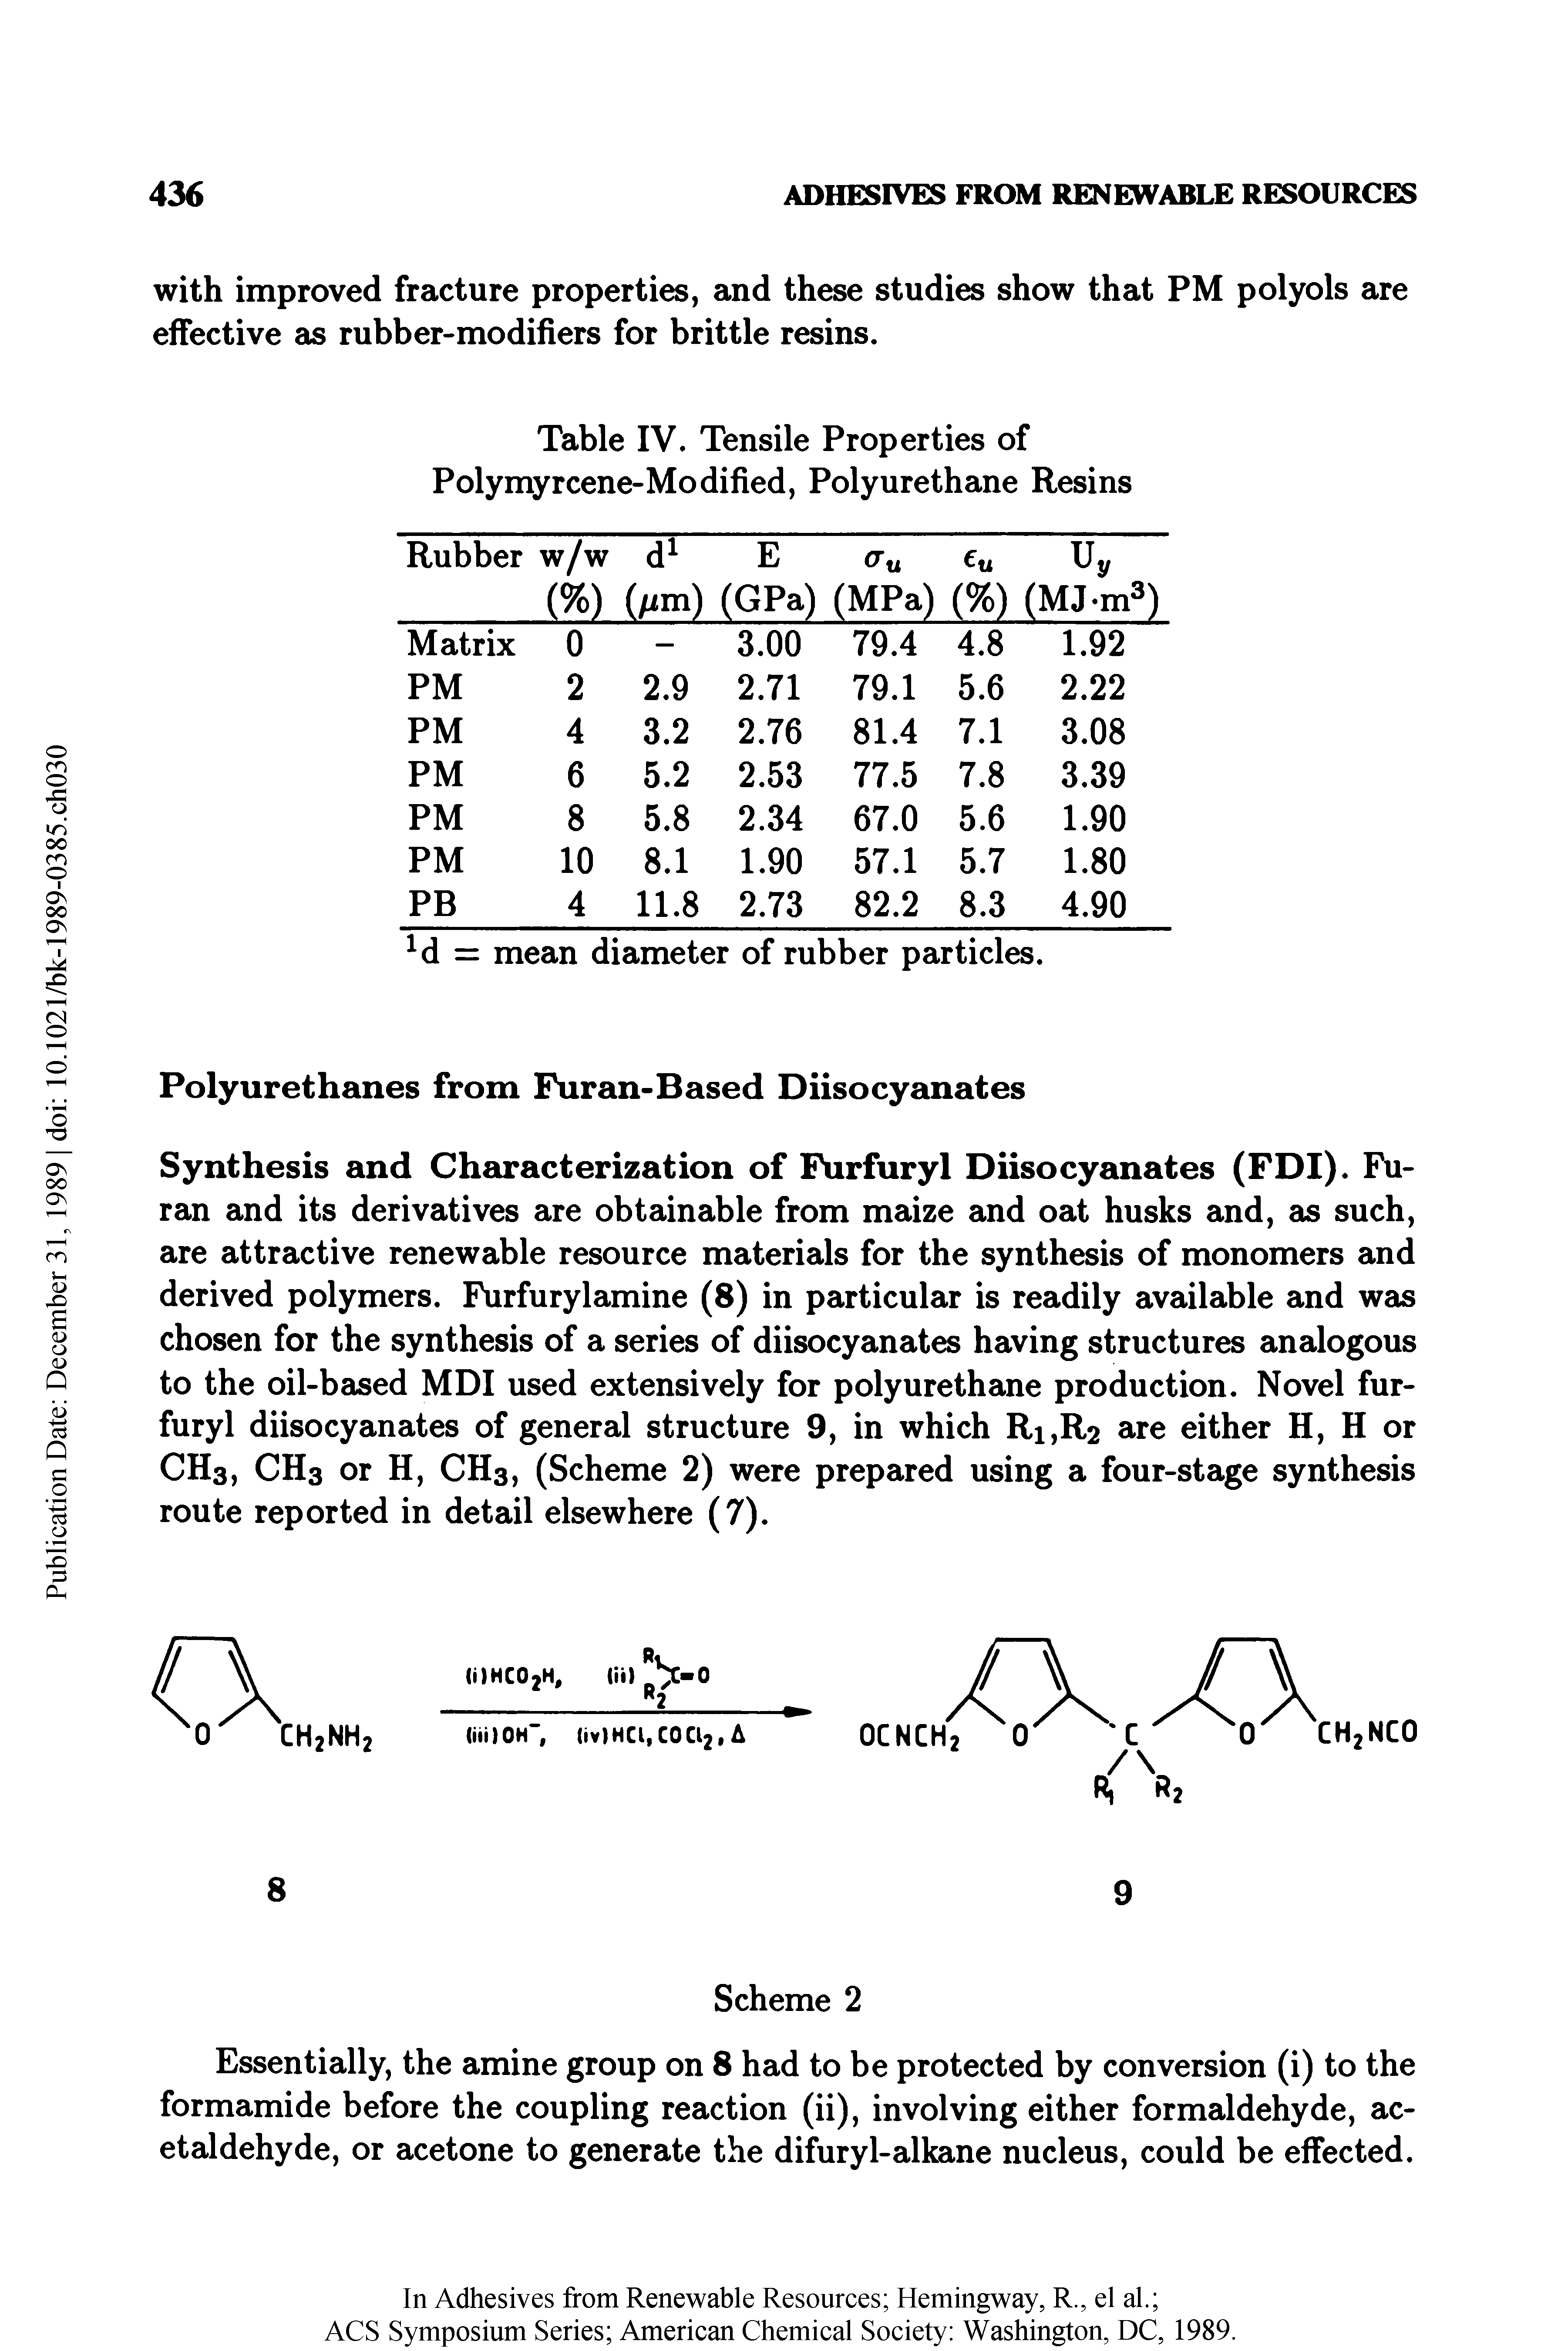 Table IV. Tensile Properties of Polymyrcene-Modified, Polyurethane Resins...